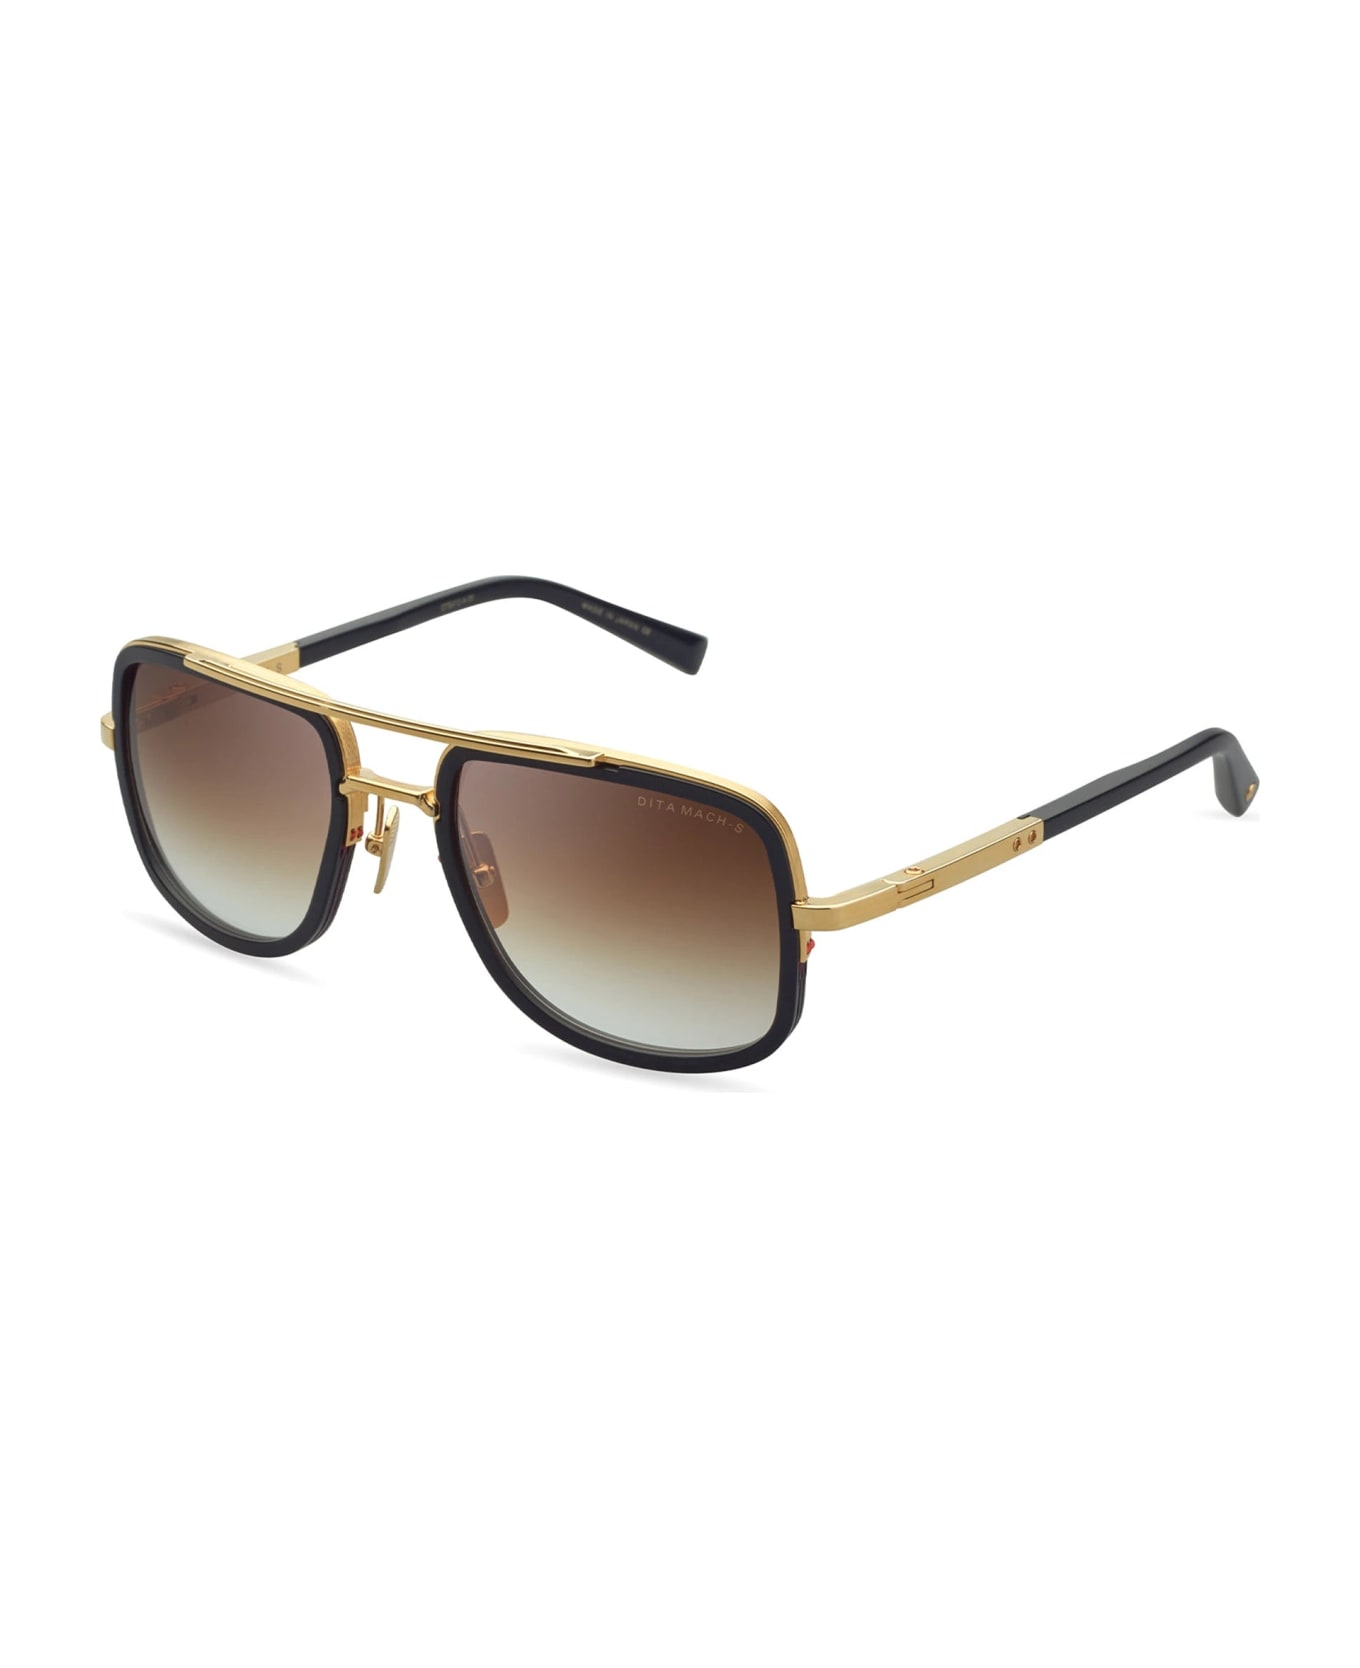 Dita Mach-s - Yellow Gold / Black Sunglasses - gold/black